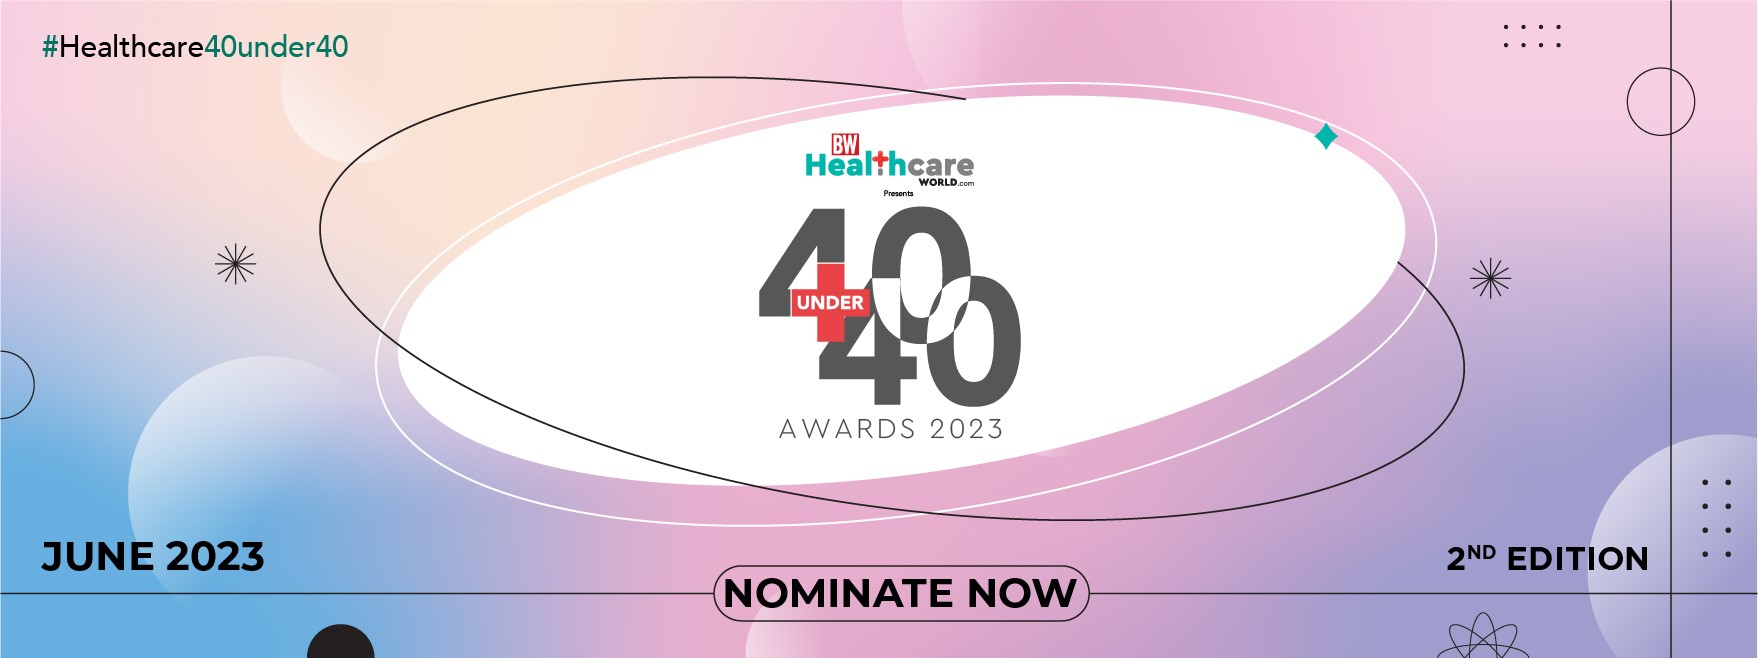 BW Healthcare 40 Under 40 Summit & Awards